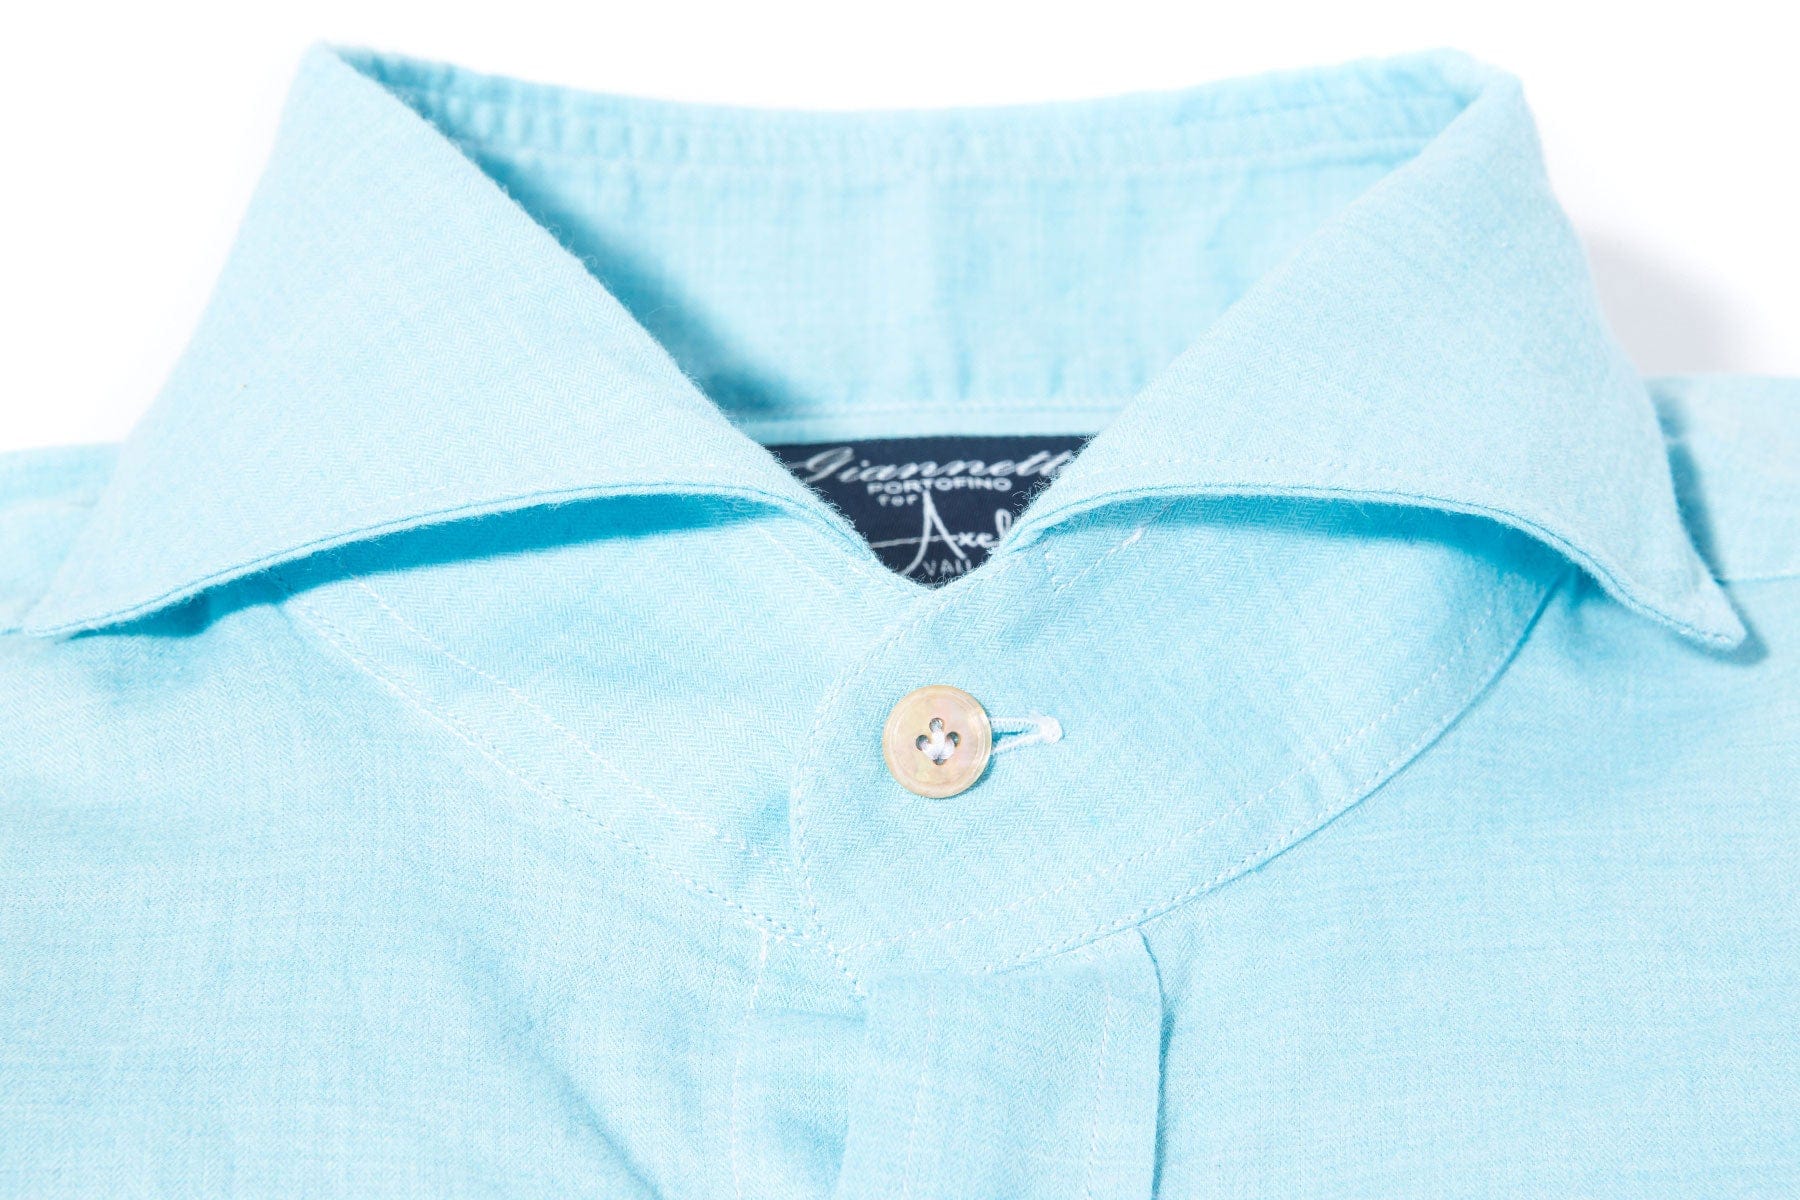 Diablo Cotton Shirt in Turquoise - AXEL'S